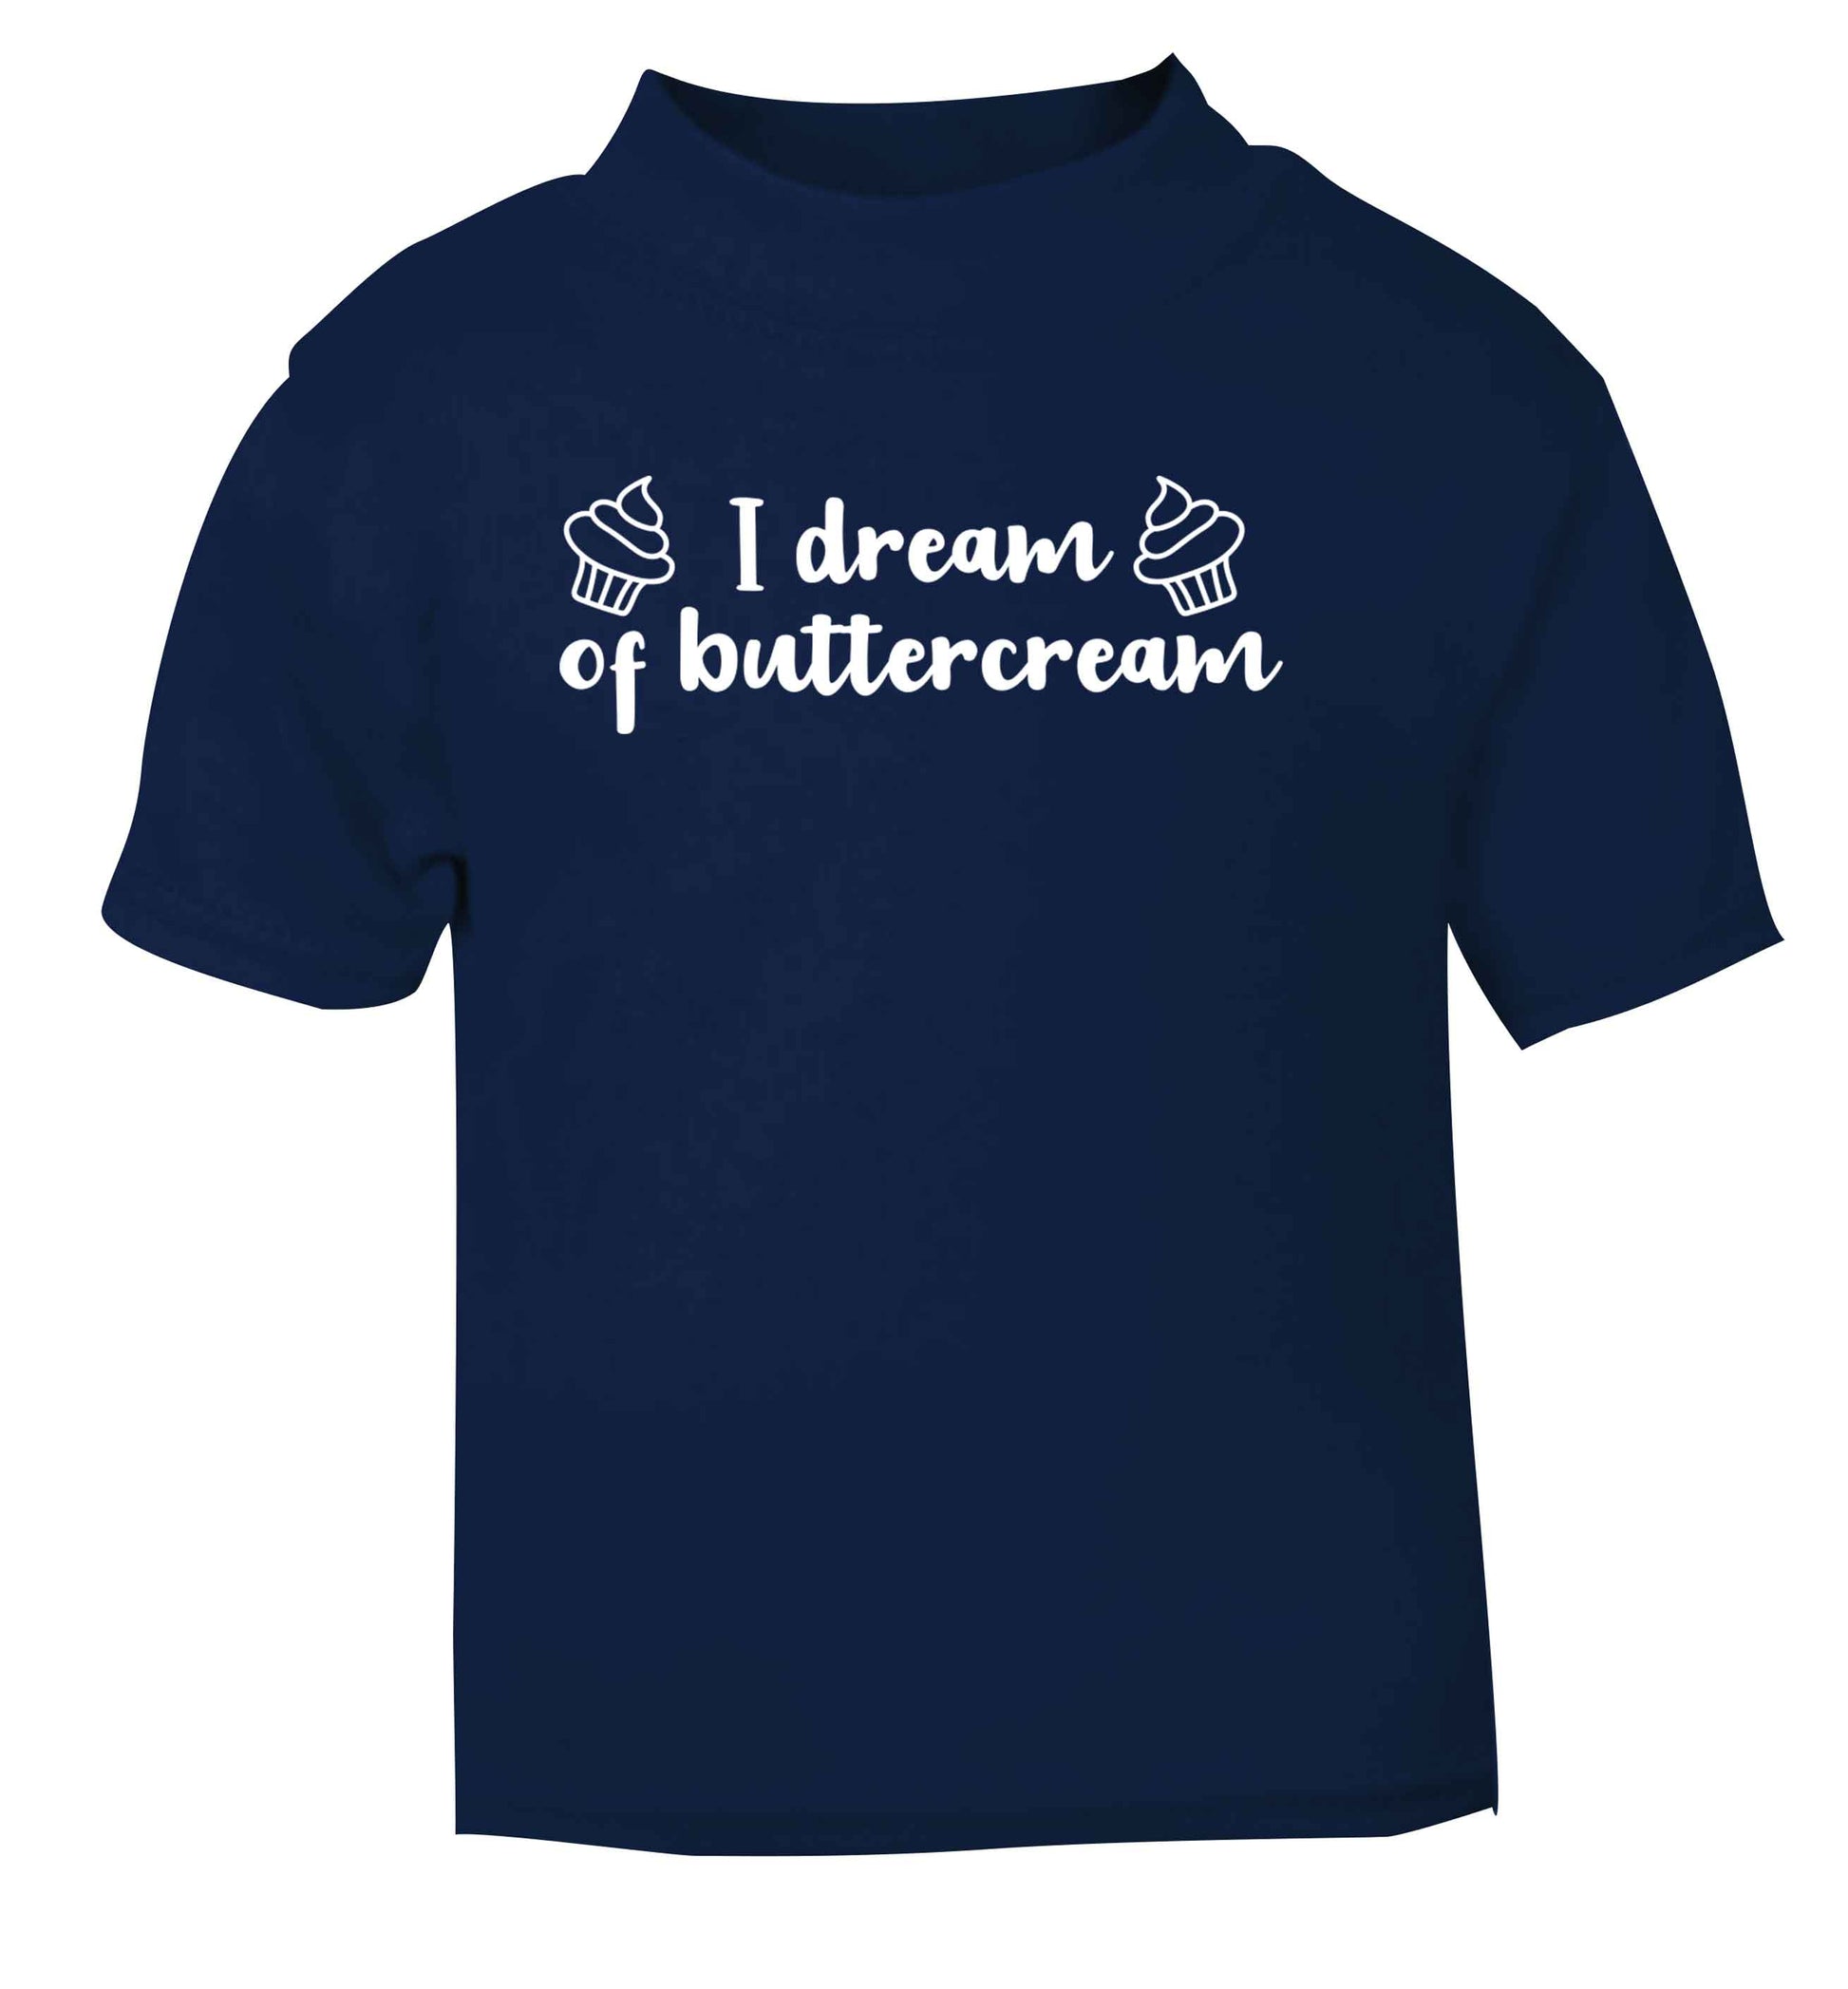 I dream of buttercream navy Baby Toddler Tshirt 2 Years